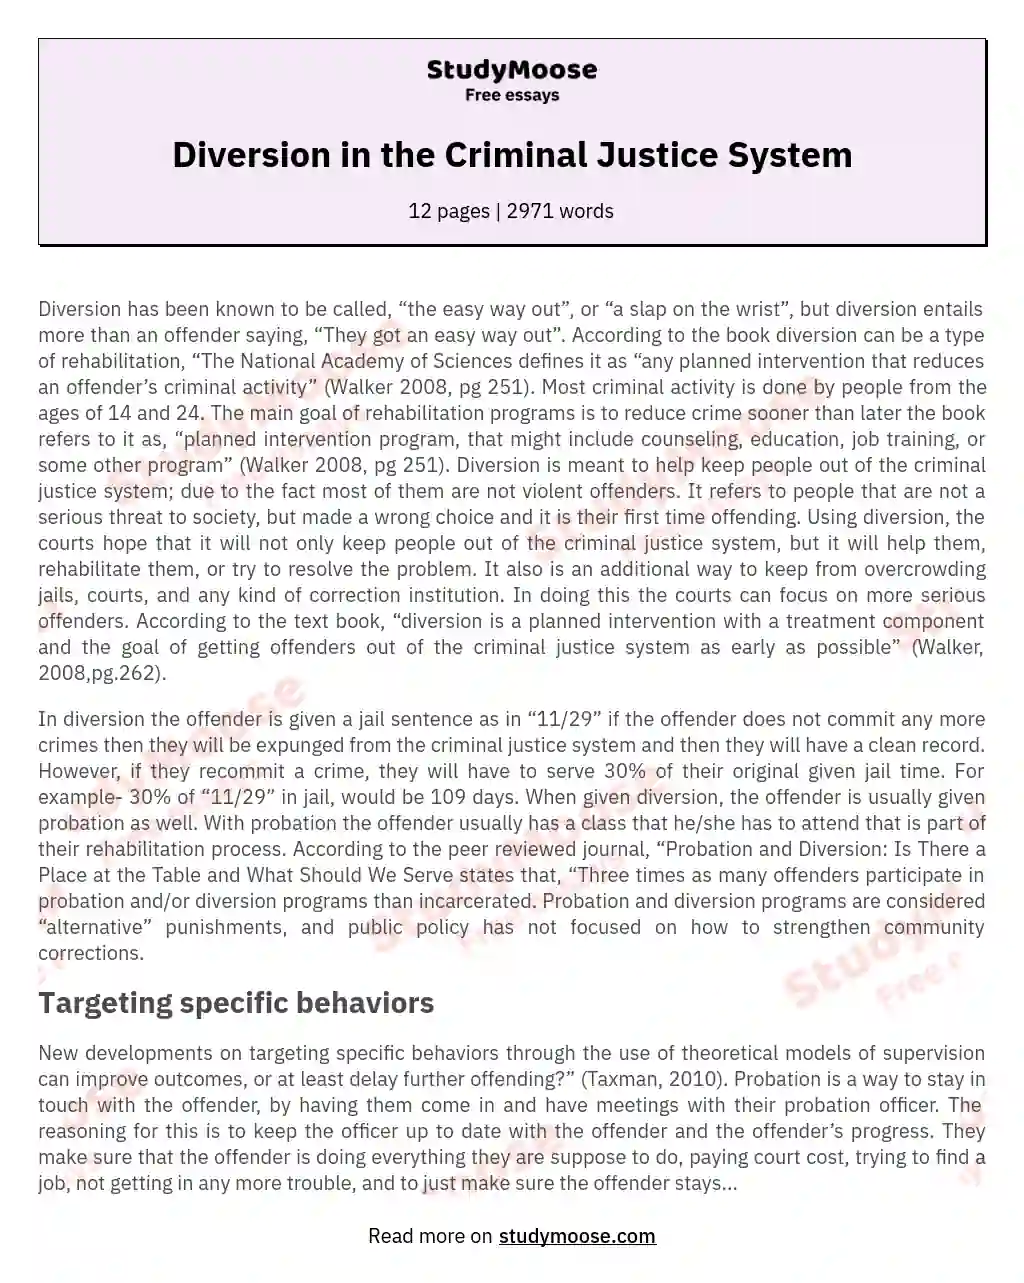 Diversion in the Criminal Justice System essay